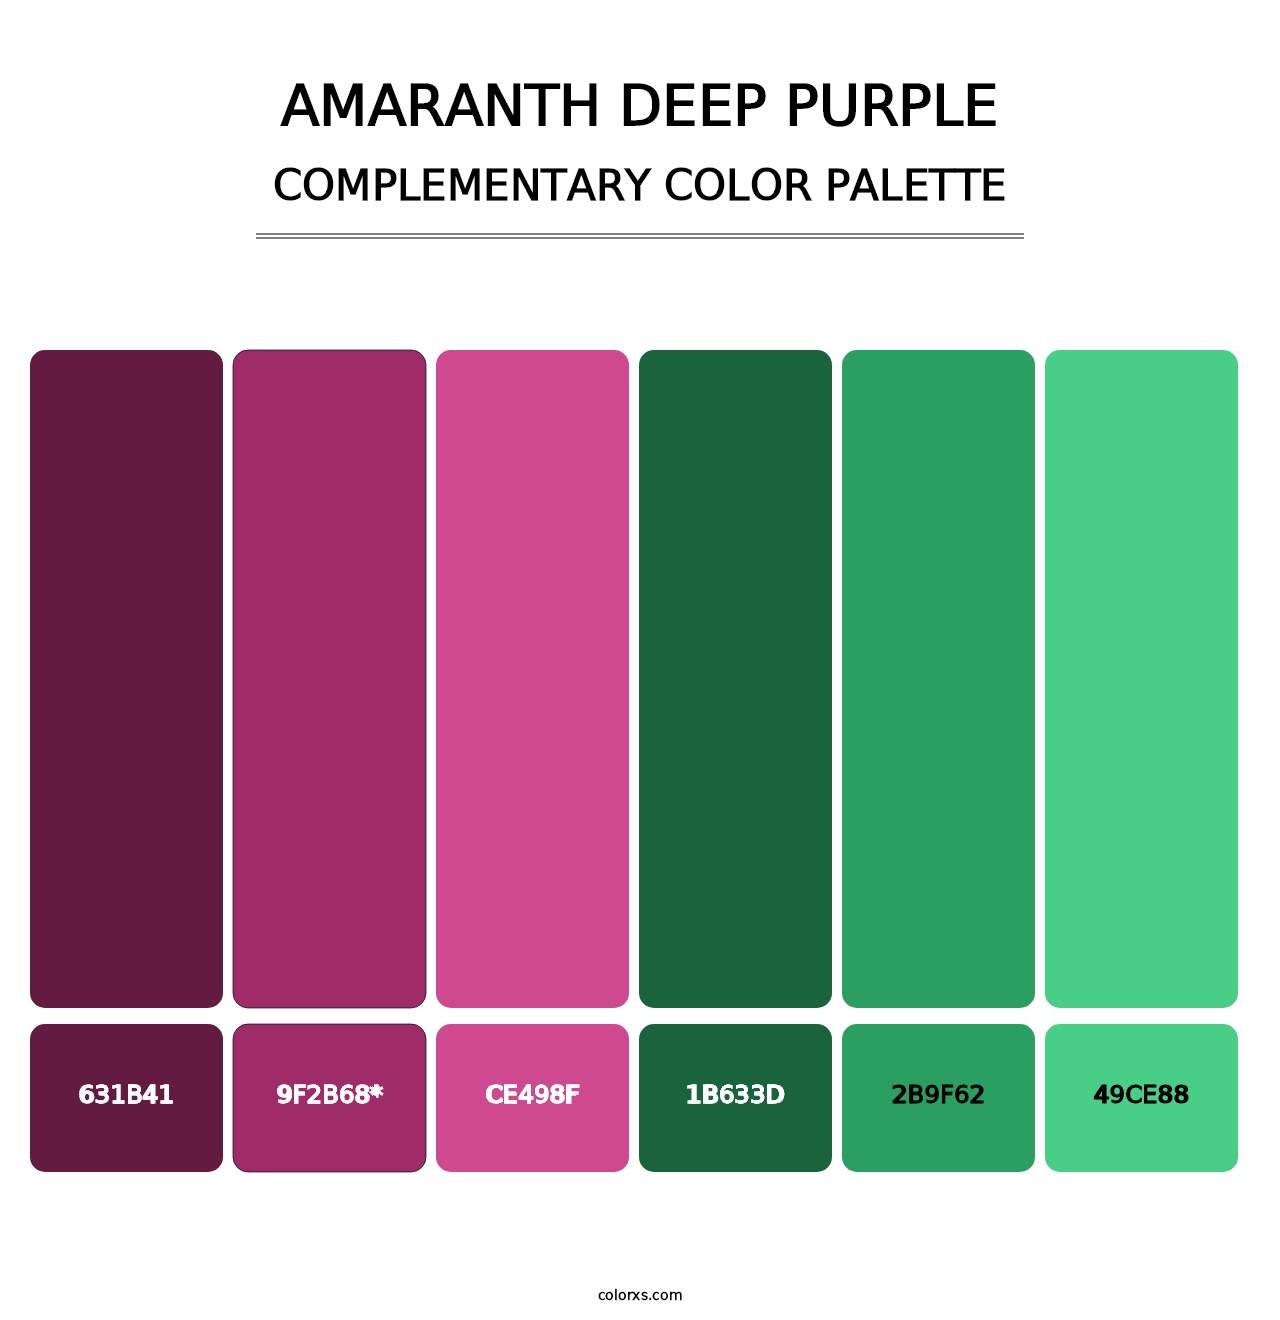 Amaranth Deep Purple - Complementary Color Palette